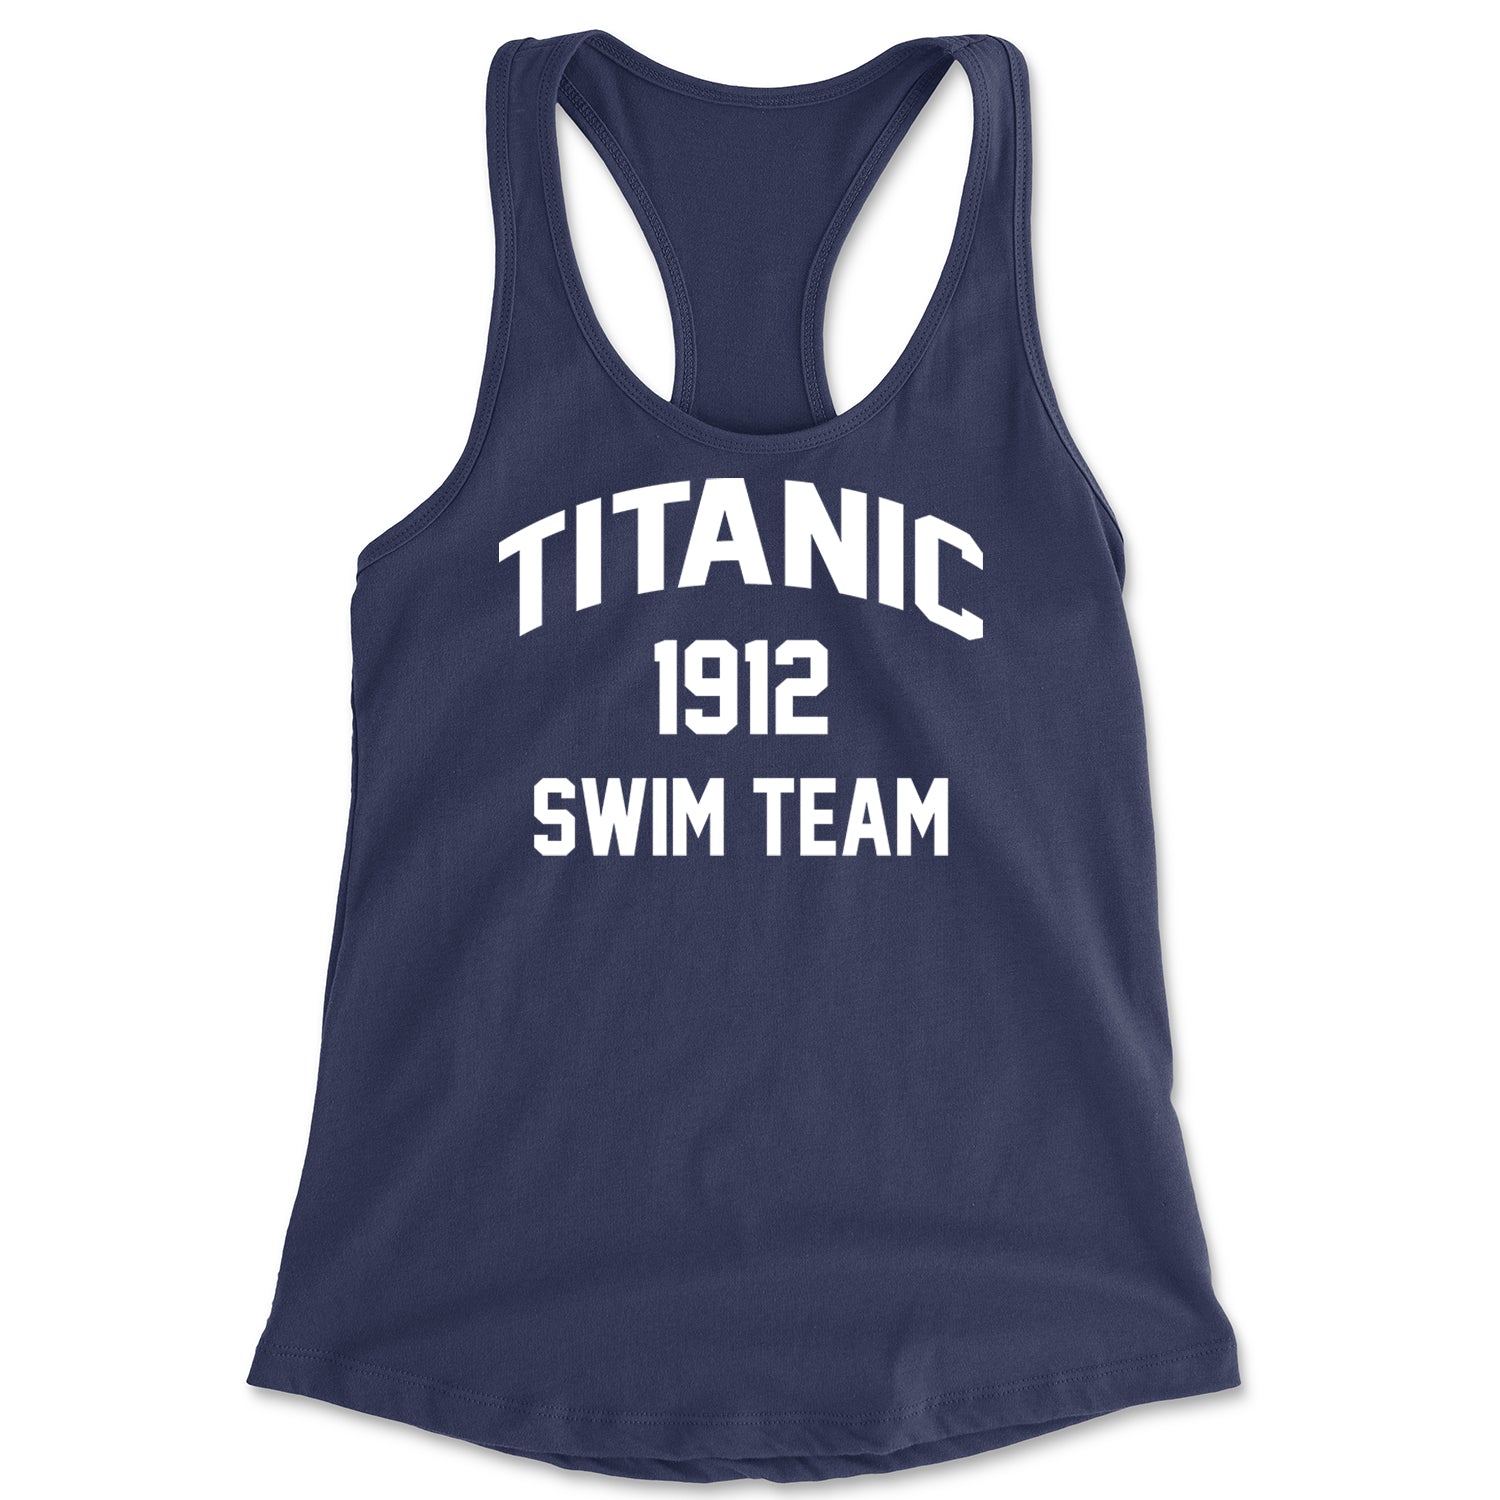 Titanic Swim Team 1912 Funny Cruise Racerback Tank Top for Women